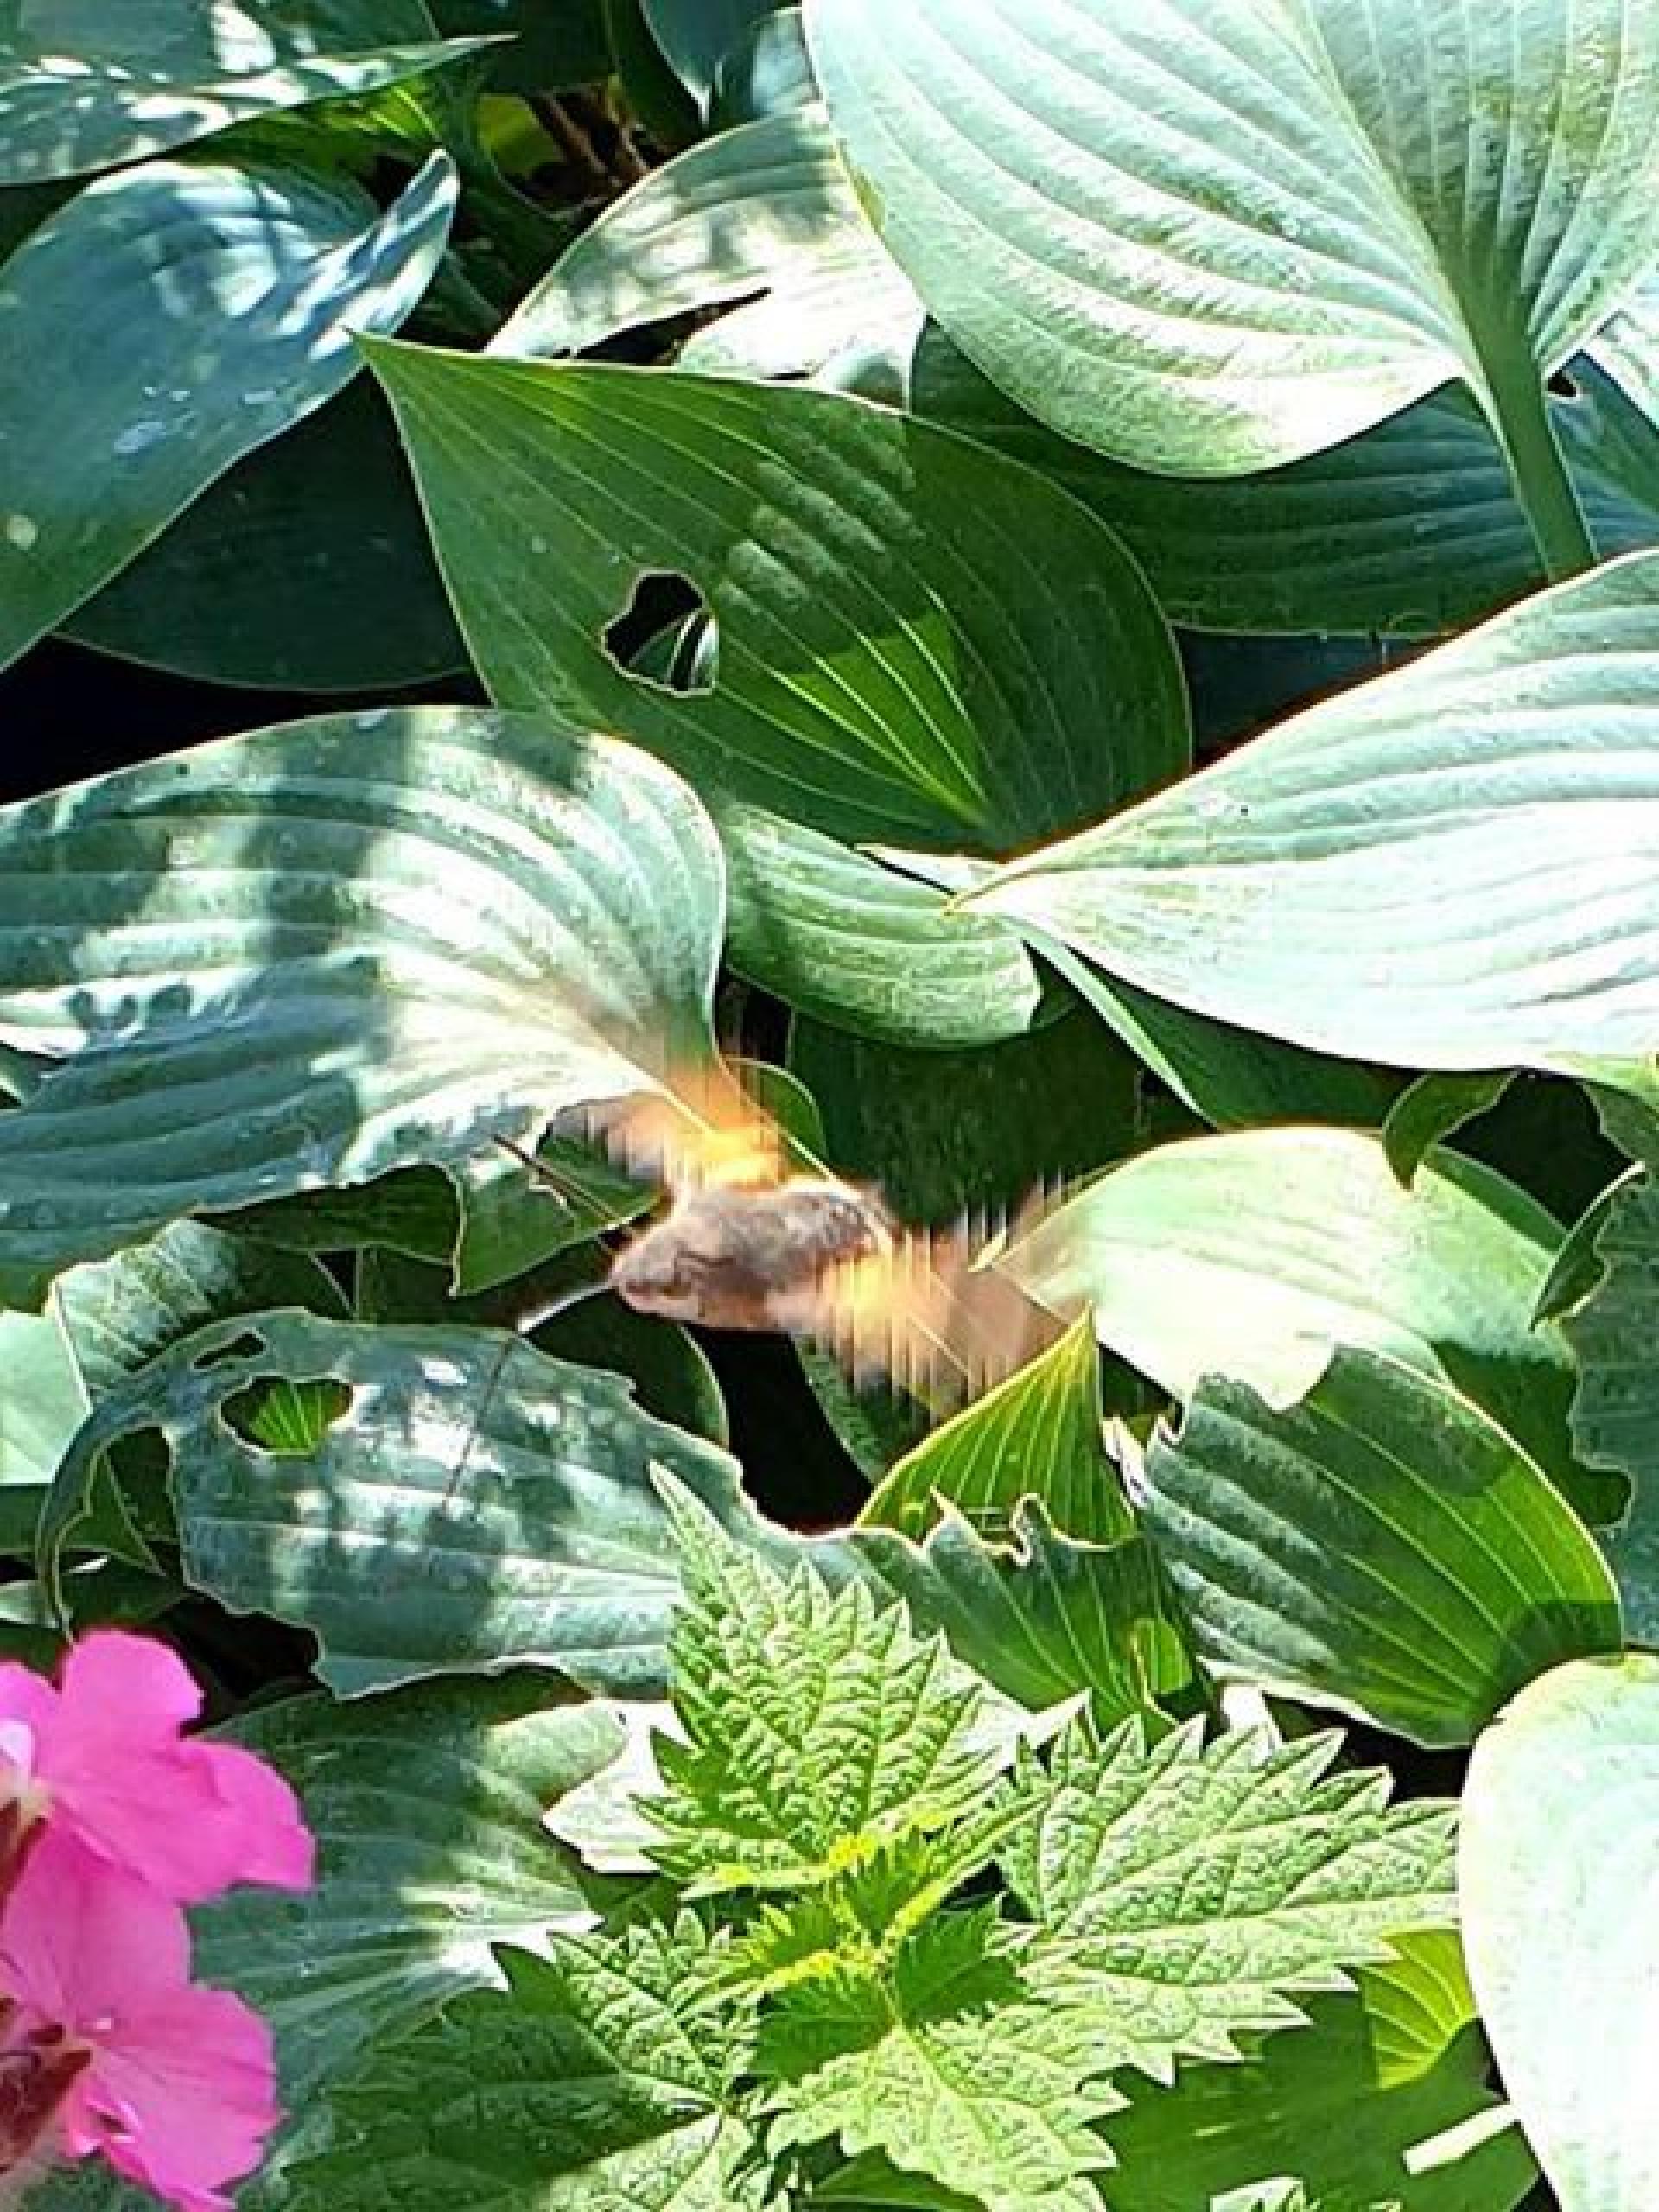 Humming Bird Hawk Moth